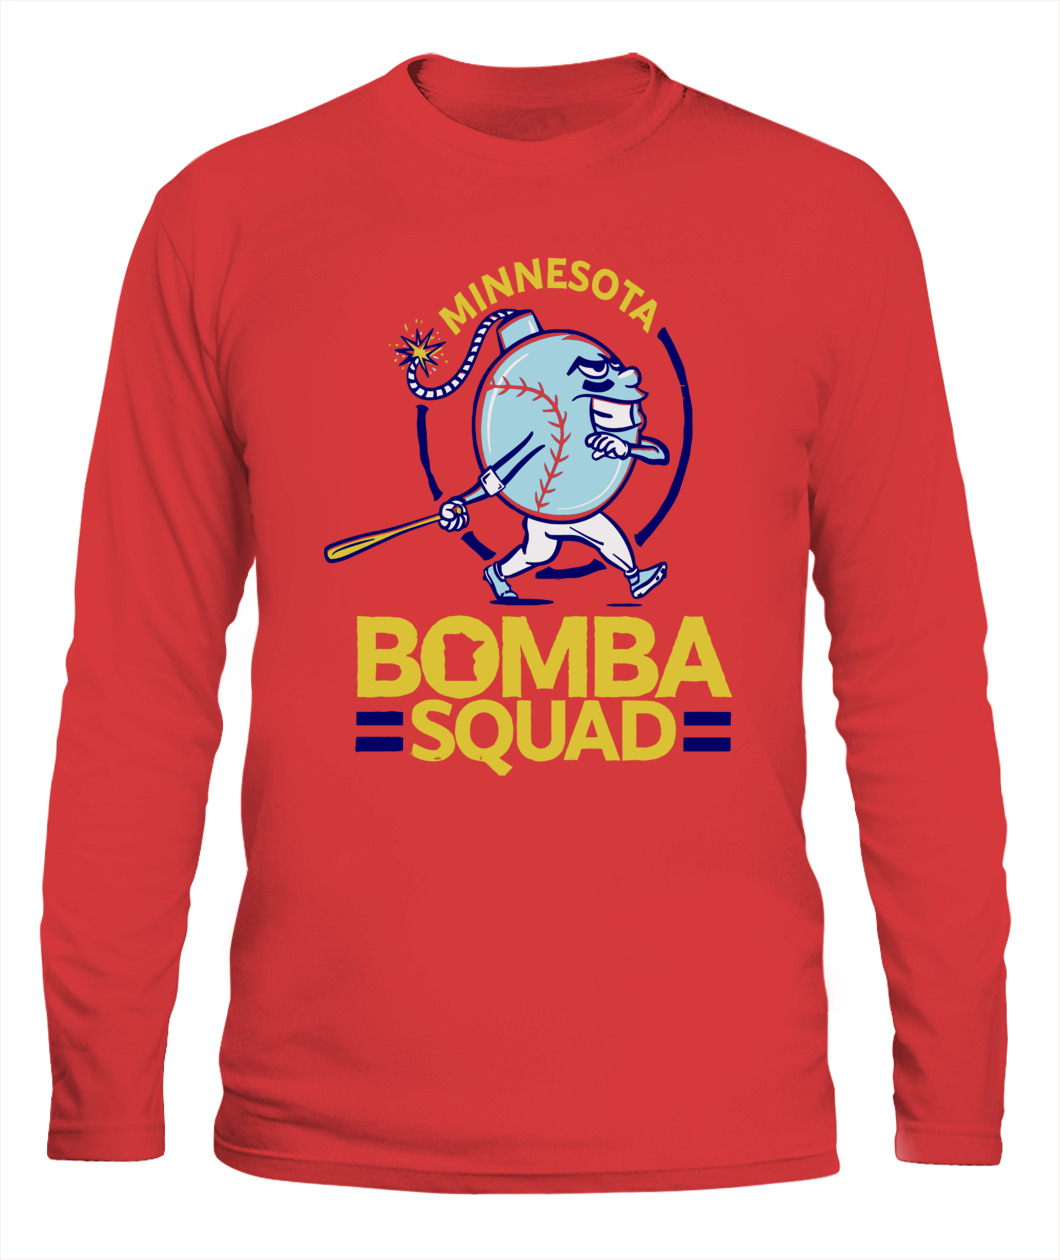 twins bomba squad shirt